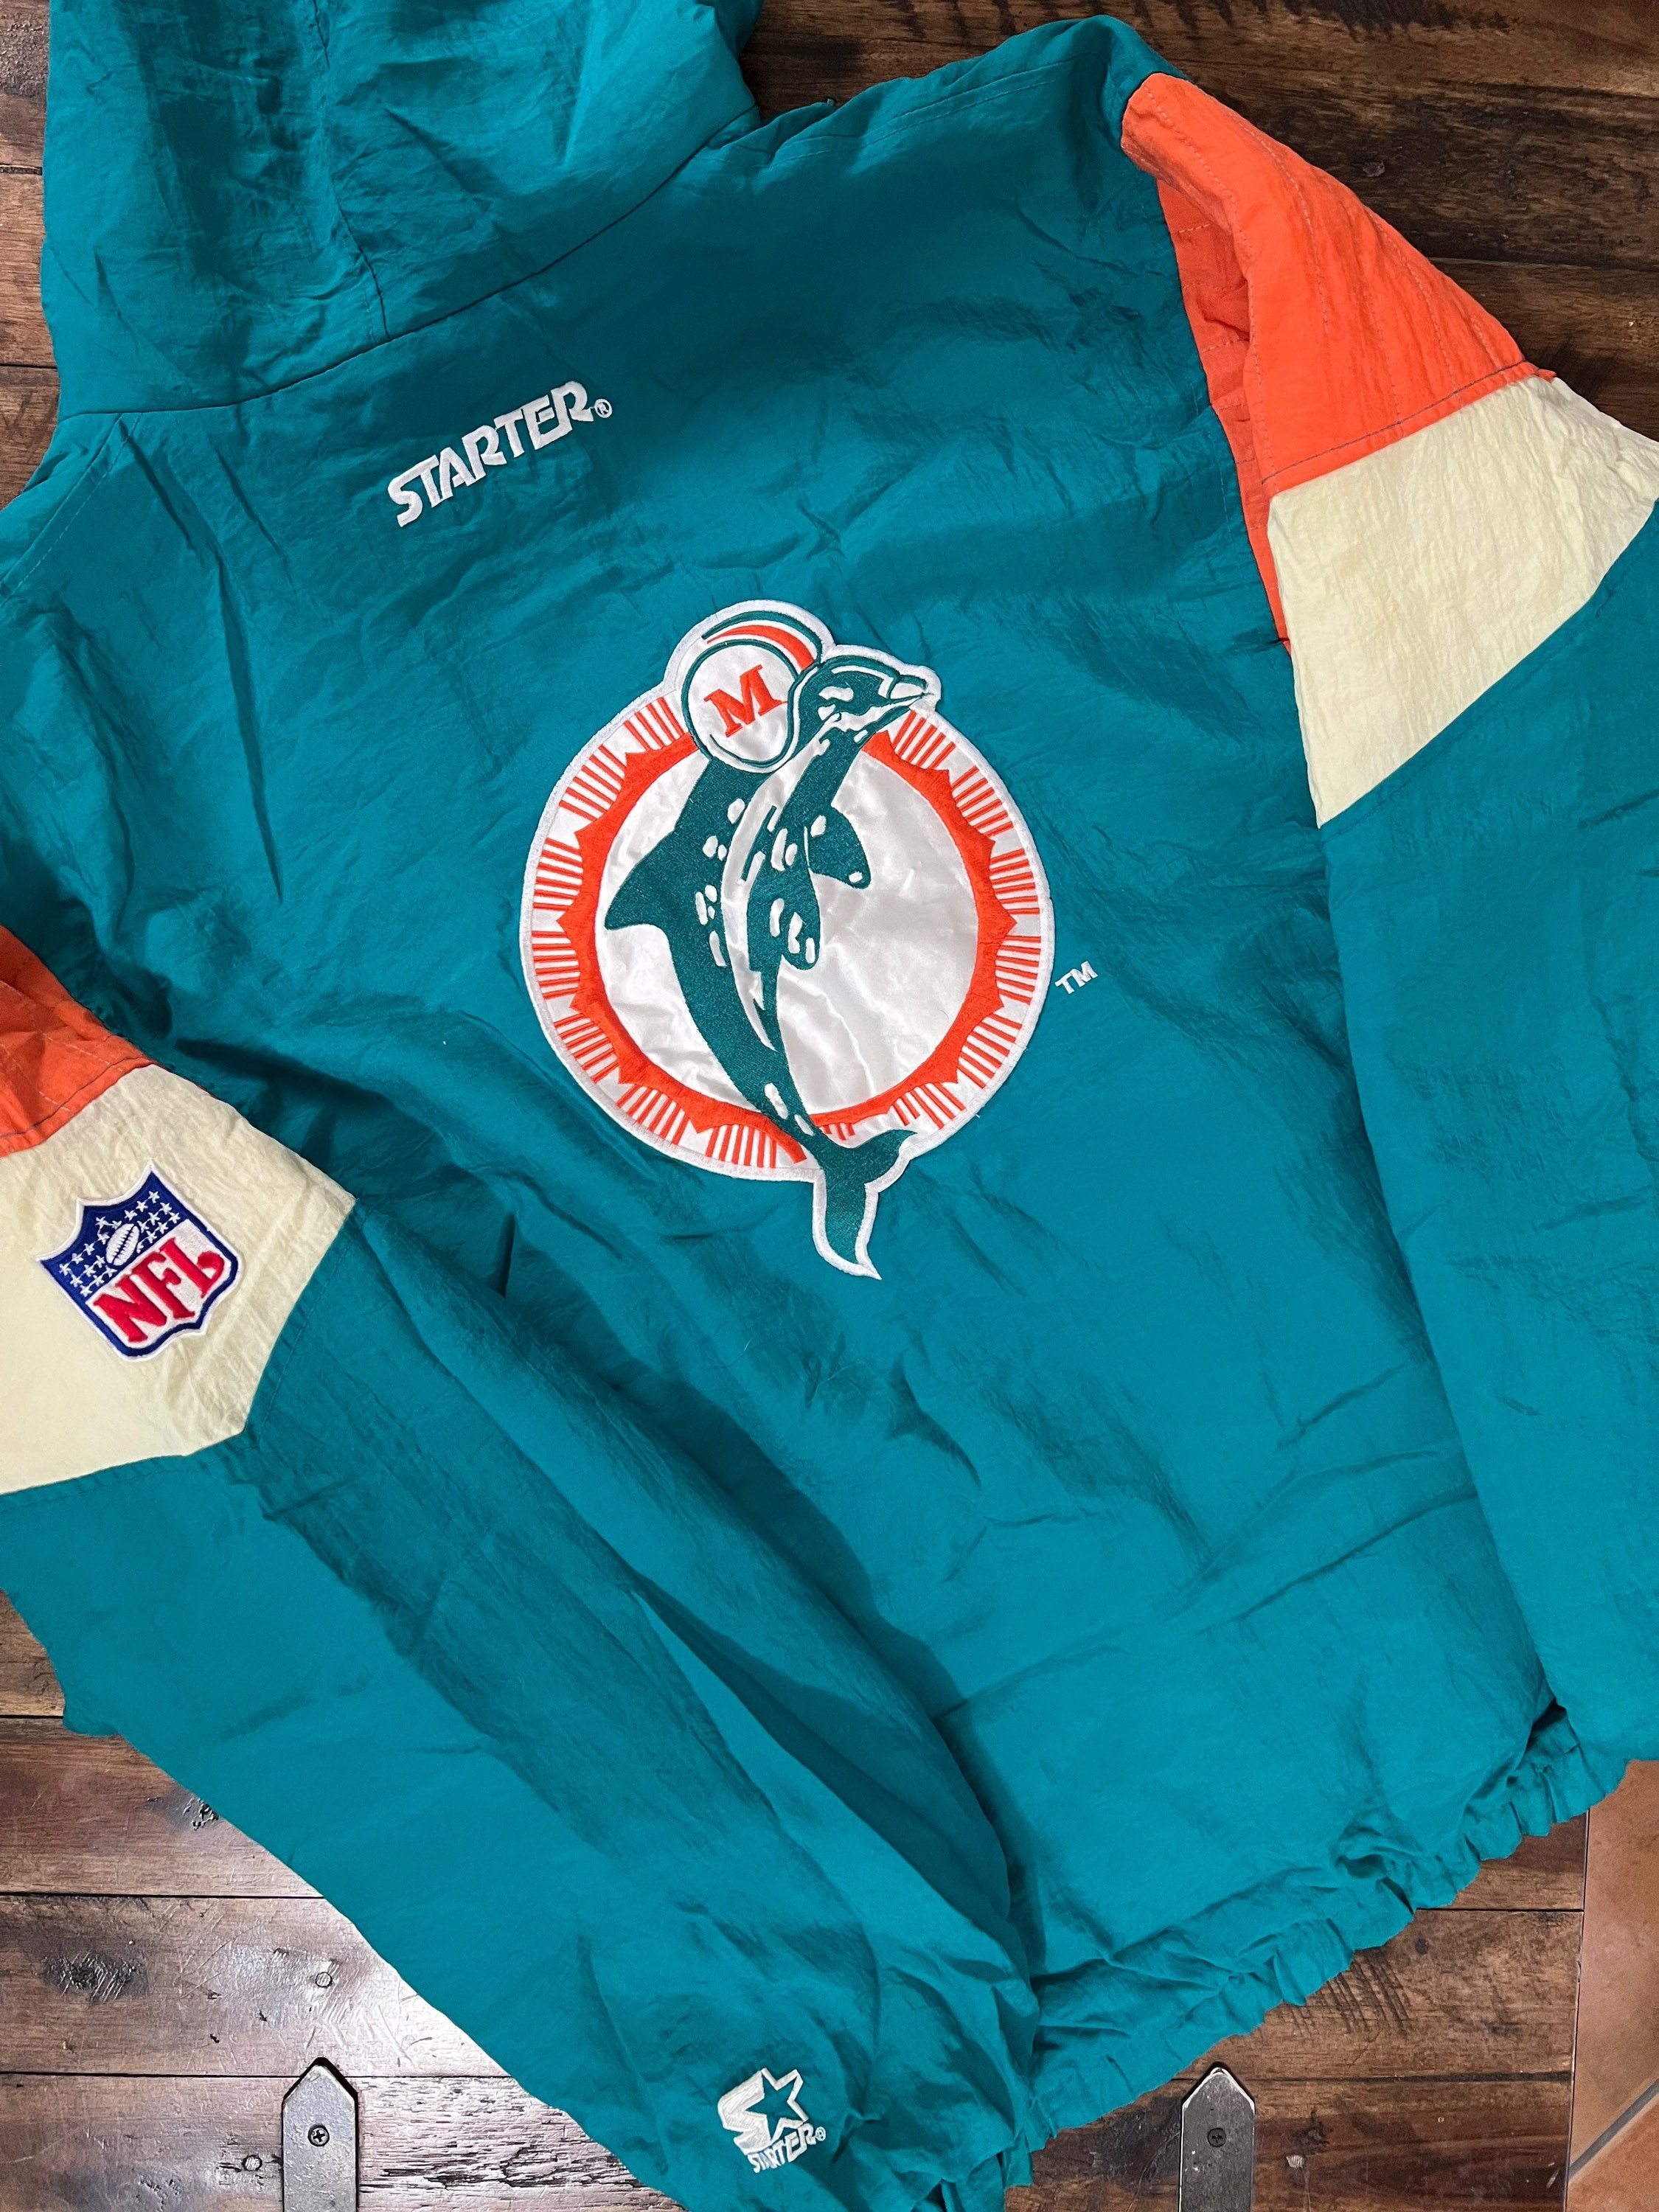 Miami Dolphins Starter Jacket Vintage 90s - Tarks Tees